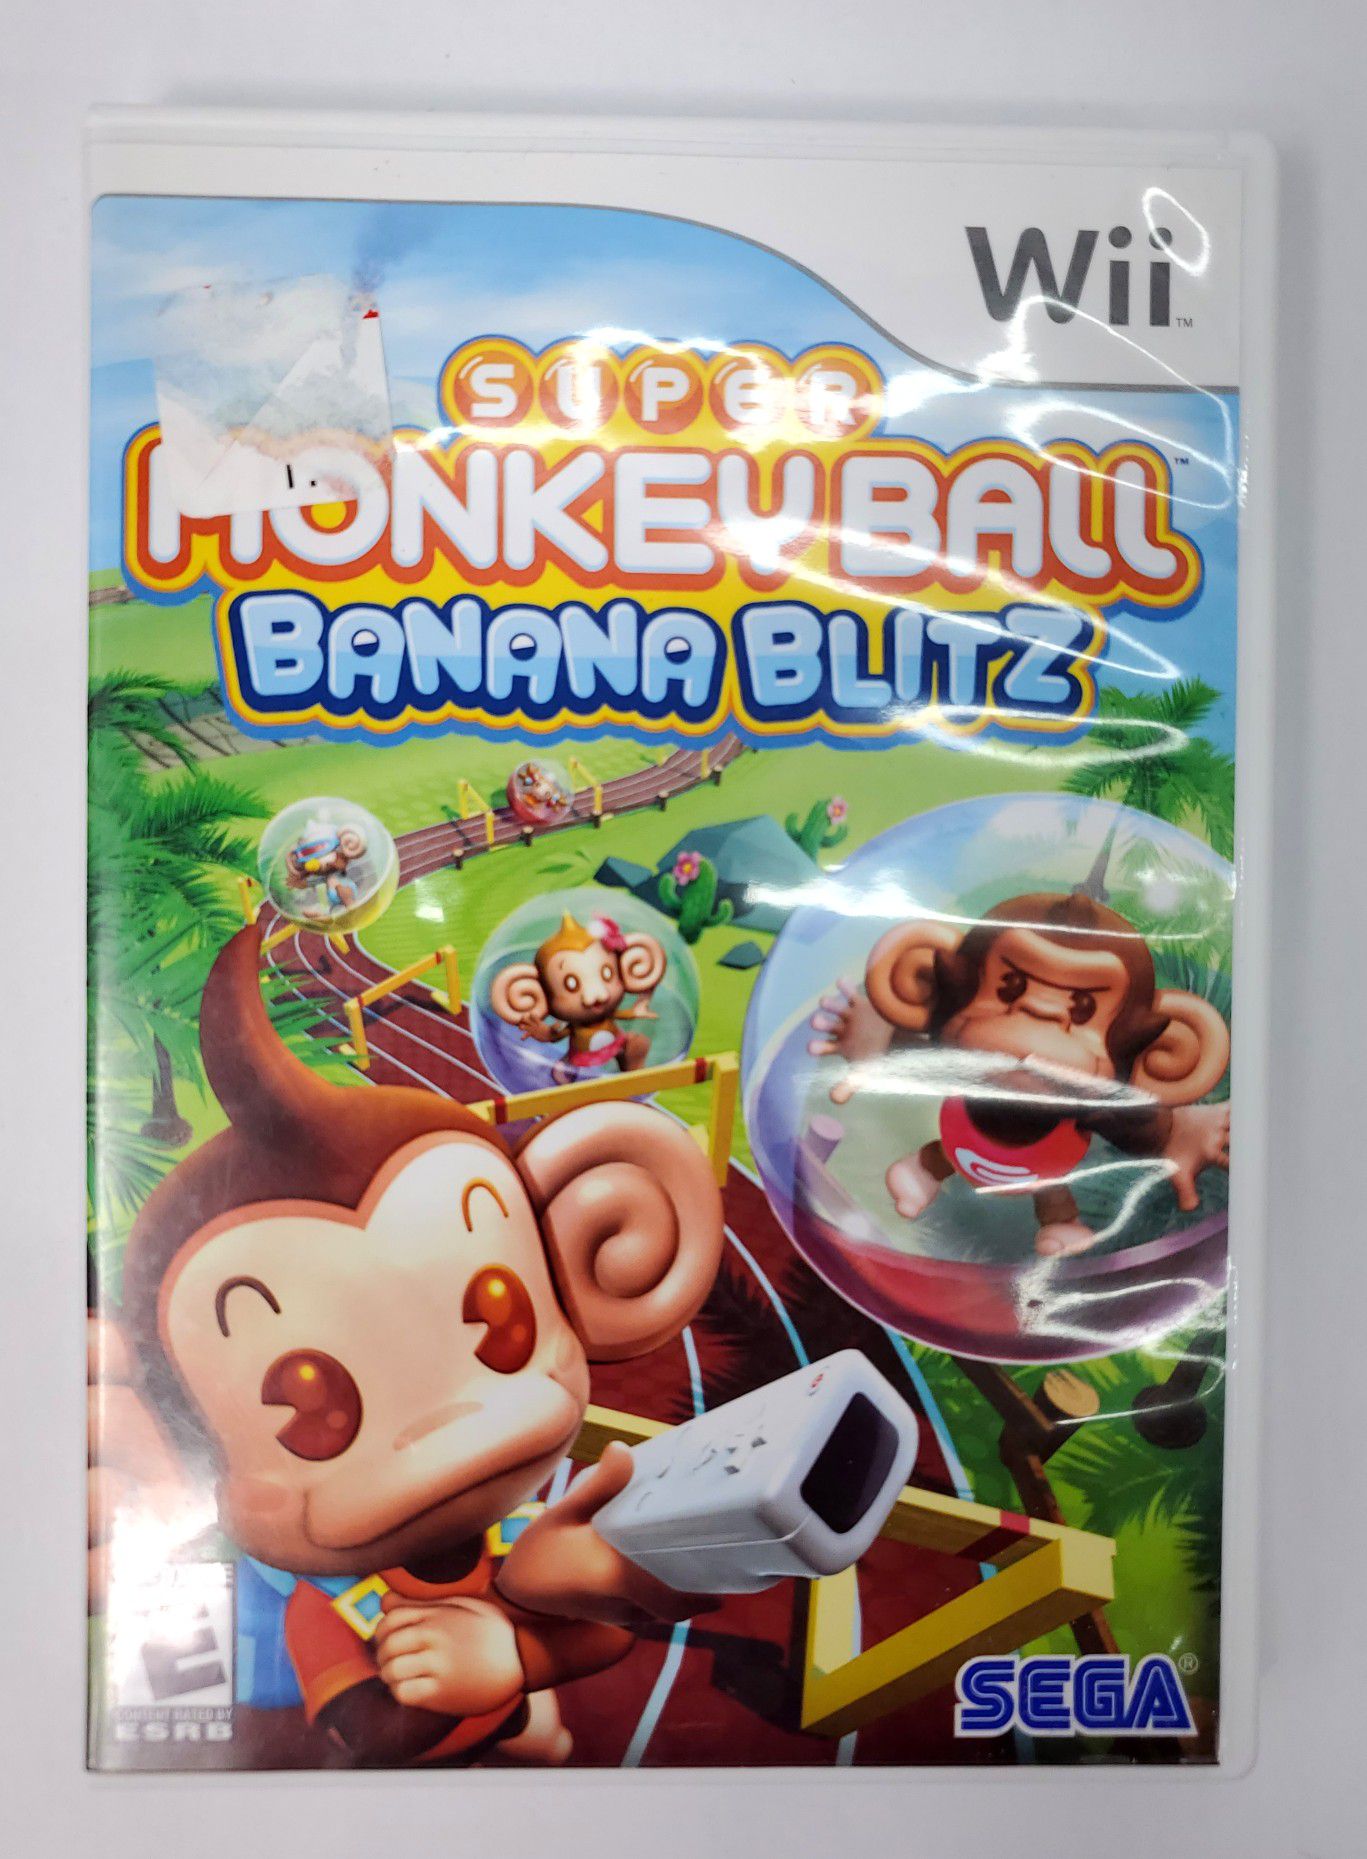 Nintendo Wii - Super Monkey Ball Banana Blitz (2006 ) - EUC